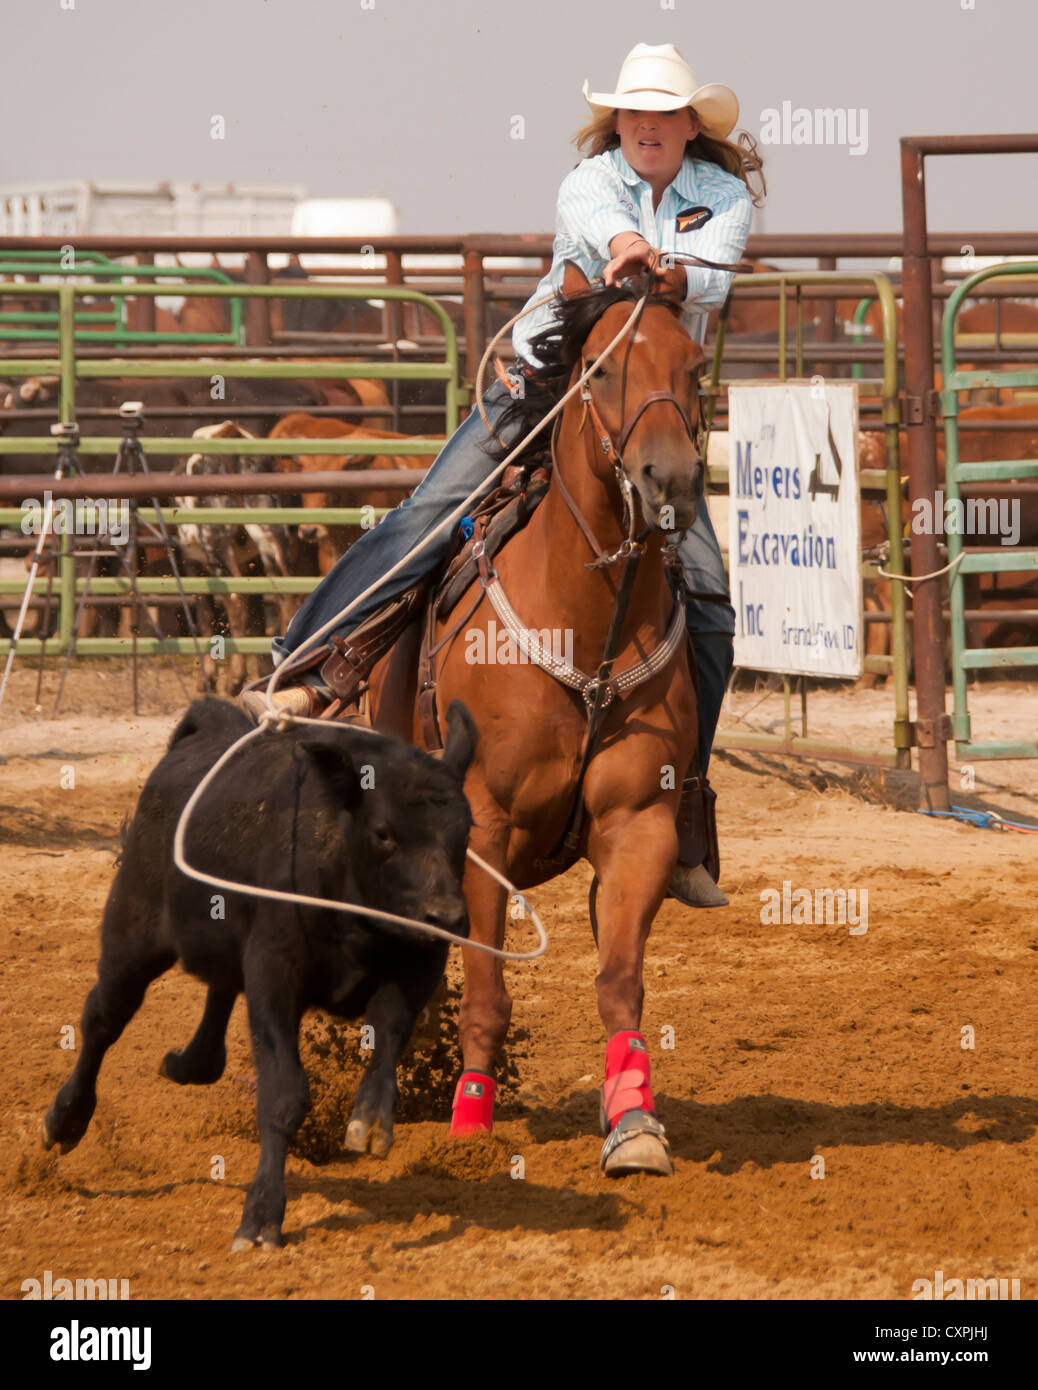 Cowgirl sur son cheval de selle Calf roping au rodéo, Bruneau, California, USA Banque D'Images